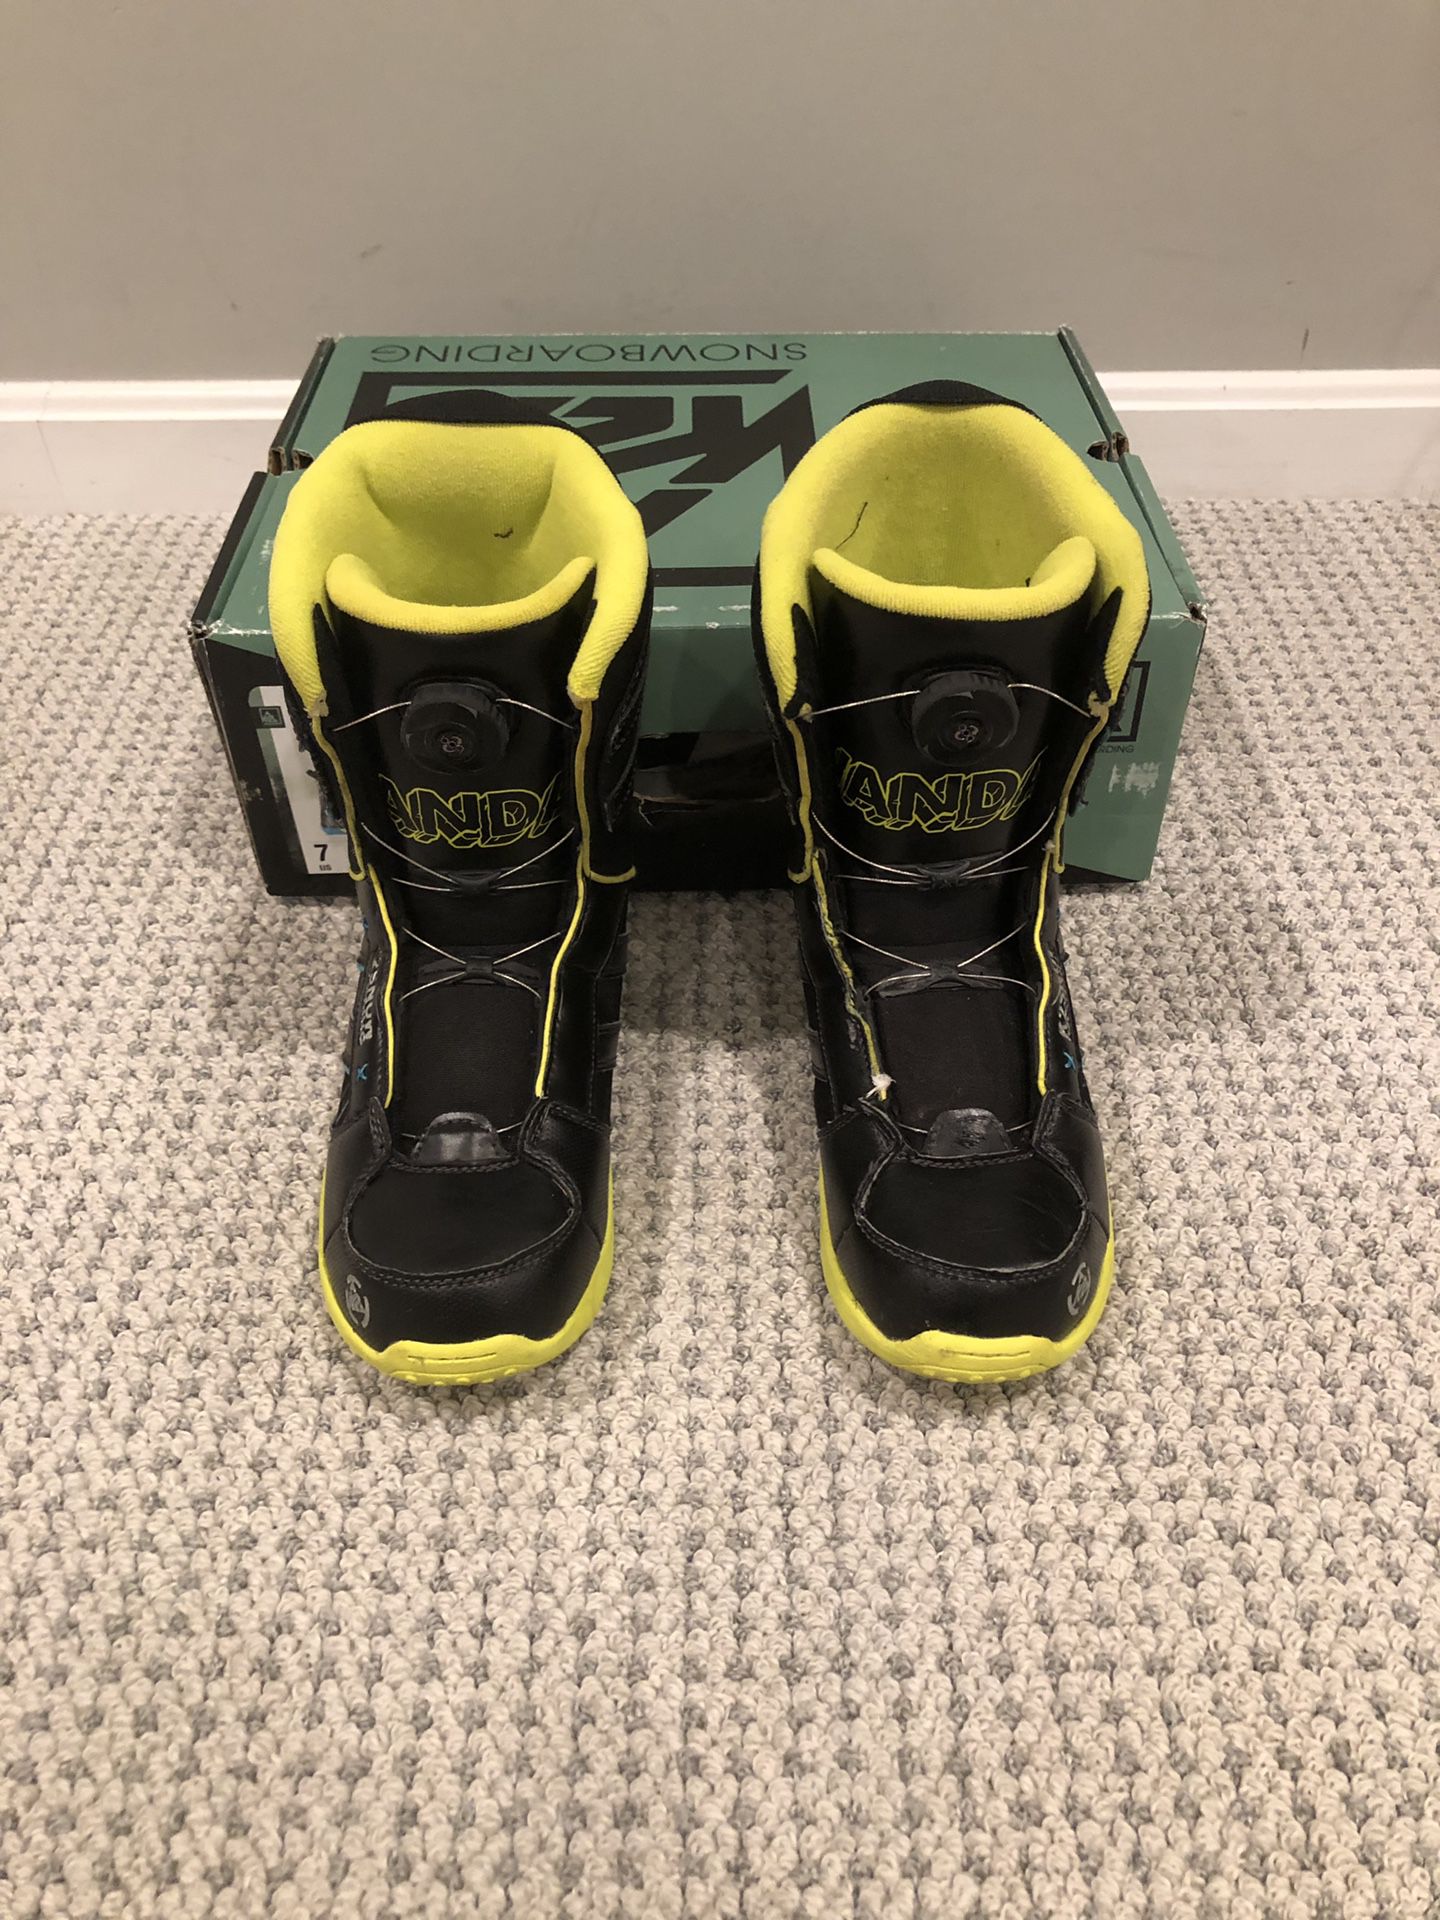 K2 Vandal Snowboard Boots - Boy's/men's size 7 by K2 Snowboarding